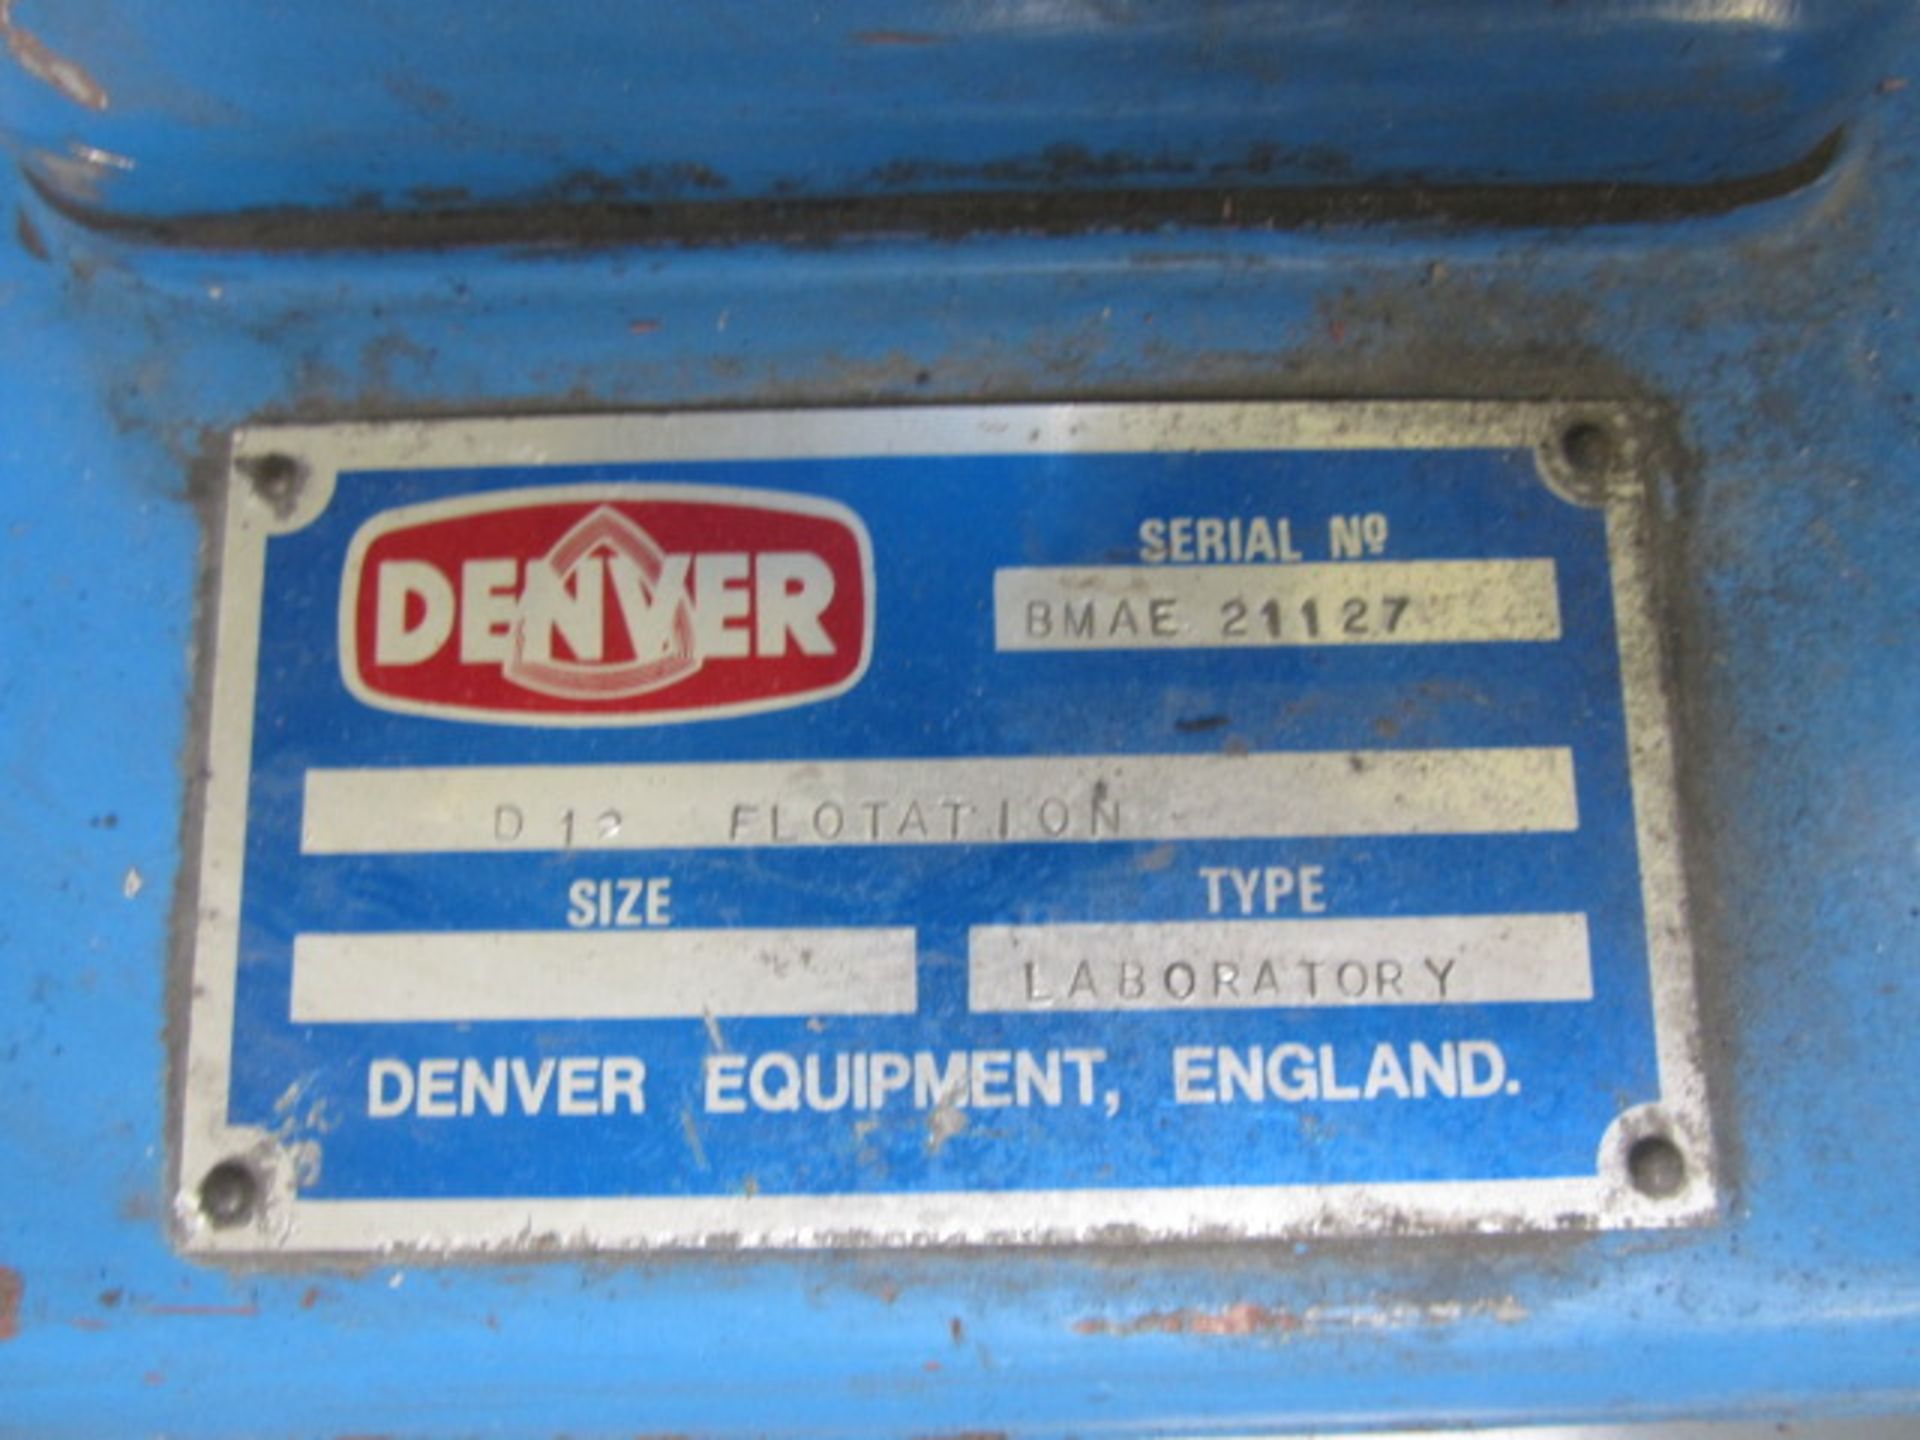 Denver D12 laboratory froth flotation machines, including flotation tanks, serial number BMAE 21127 - Image 4 of 5